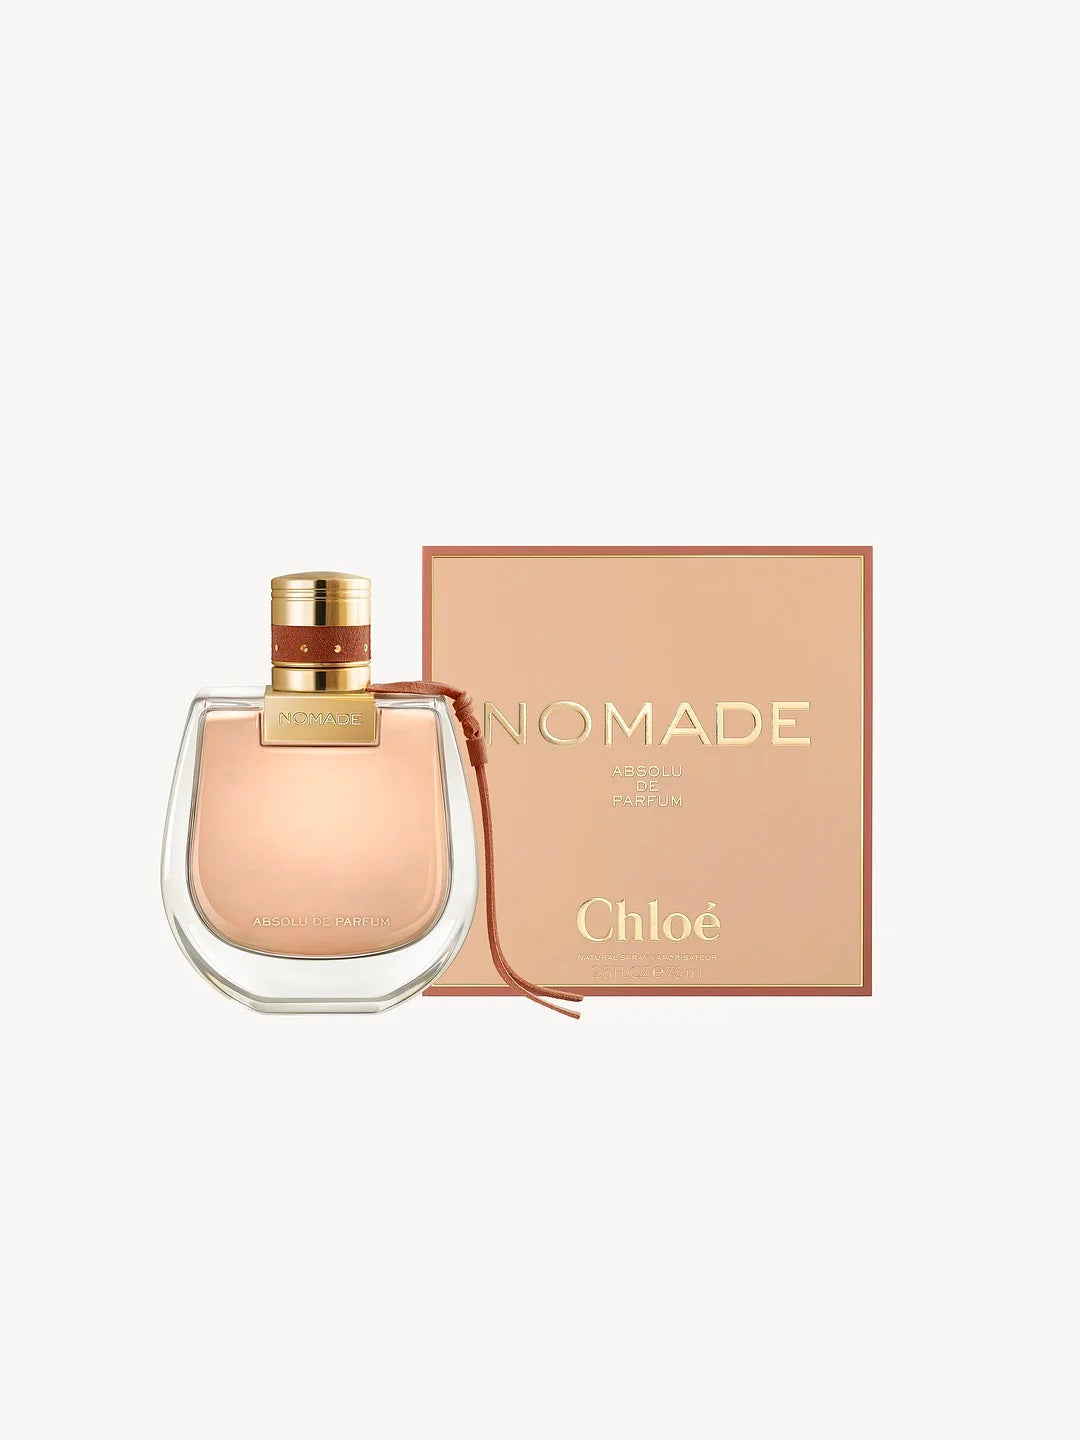 Chloe Nomade Absolu de Parfum 50ml/75ml